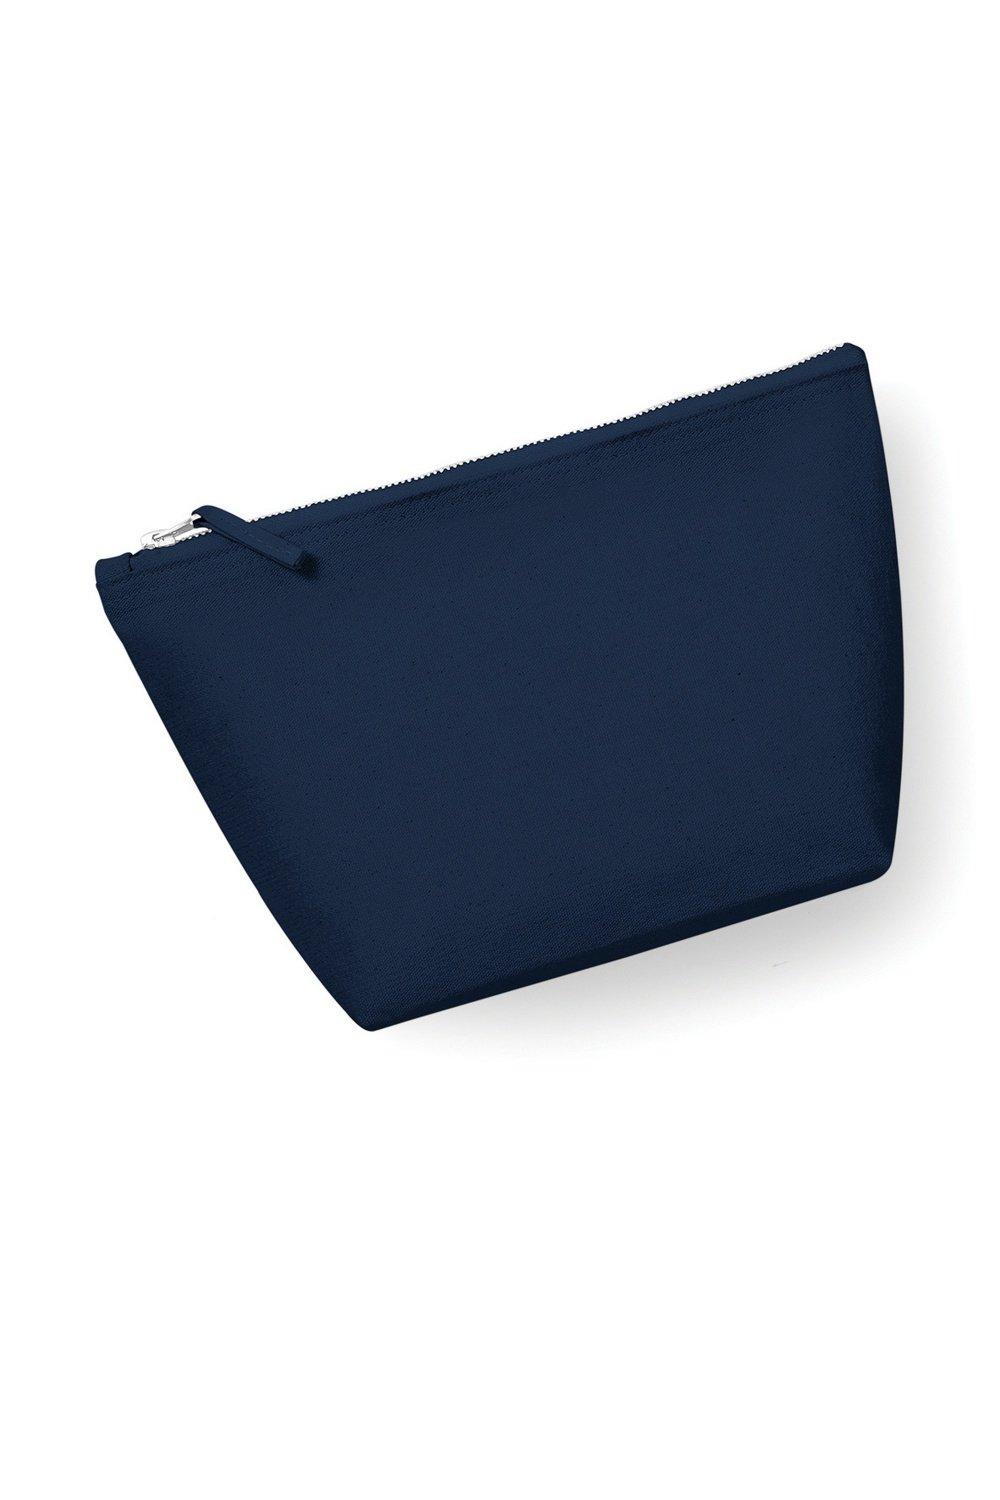 Холщовая сумка для аксессуаров Westford Mill, темно-синий клюшка ccm jetspeed ft5 jr l 50 28